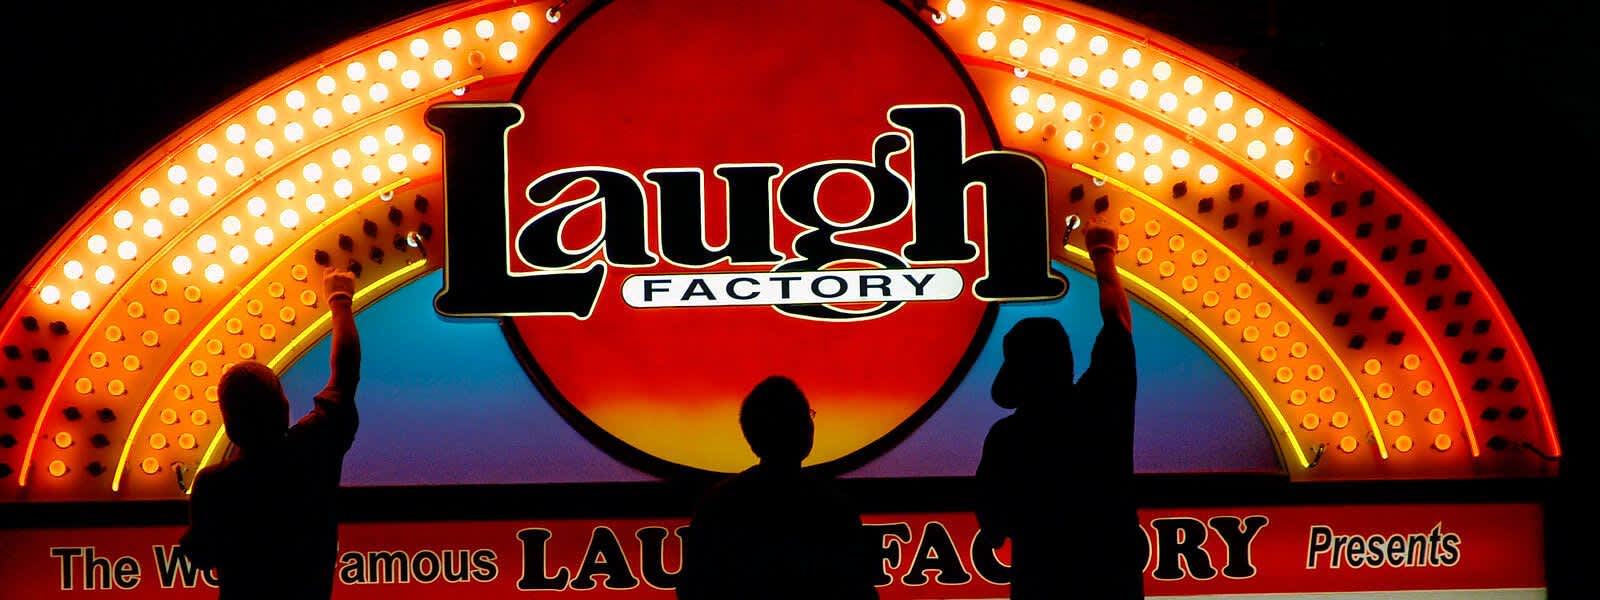 Laugh Factory Las Vegas [12/23/2021] Tickets StubHub!